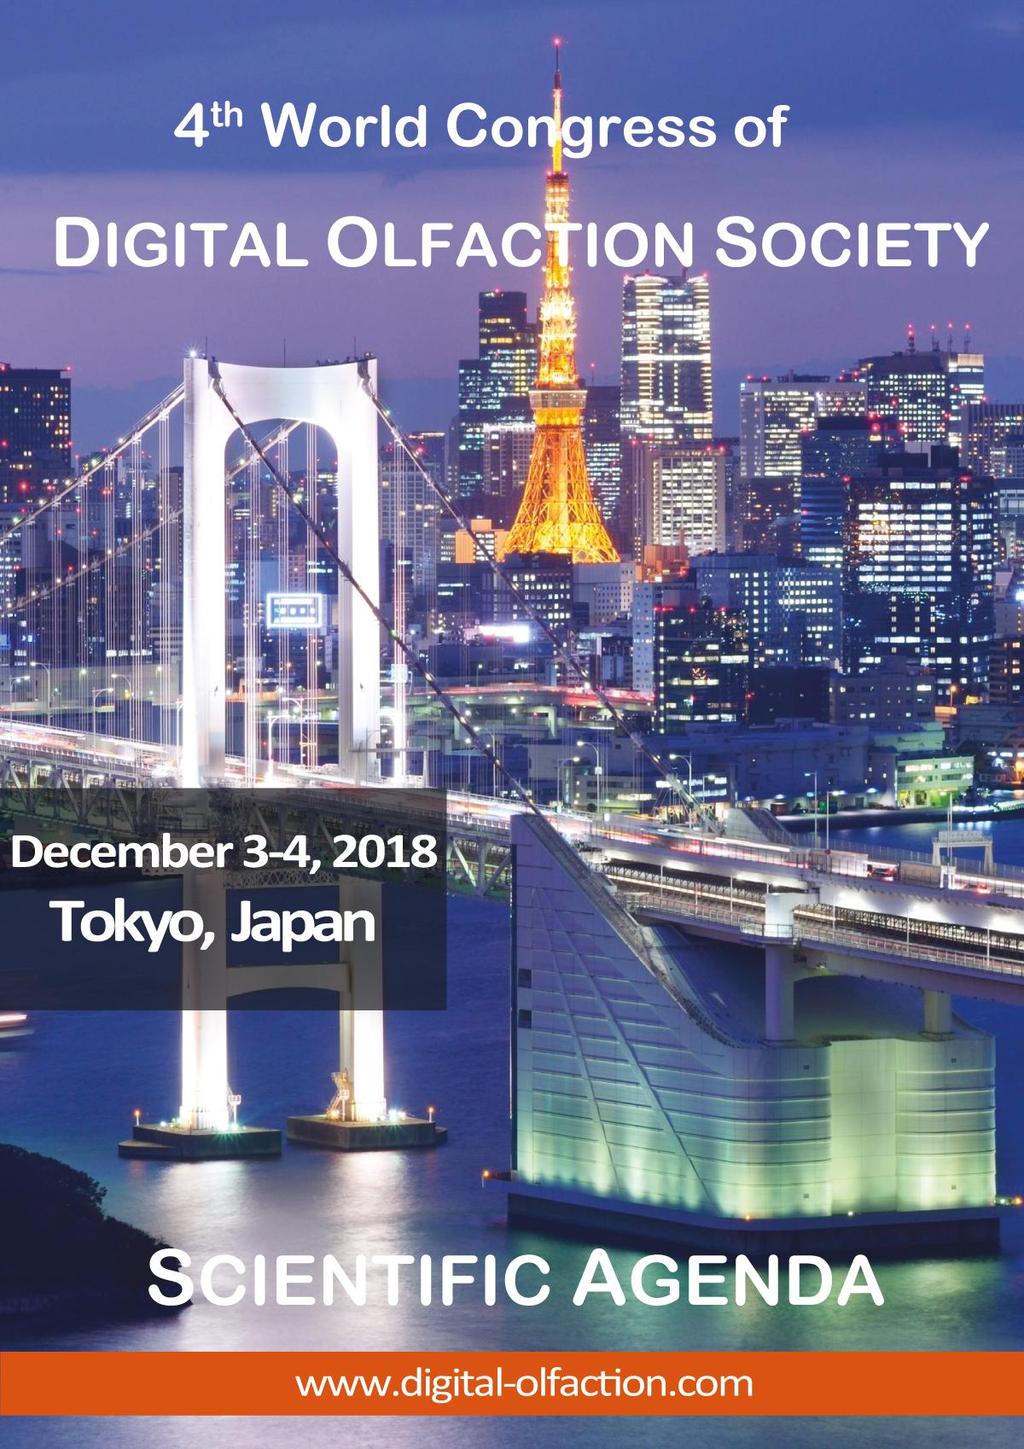 Digital Olfaction Society Fourth World Congress